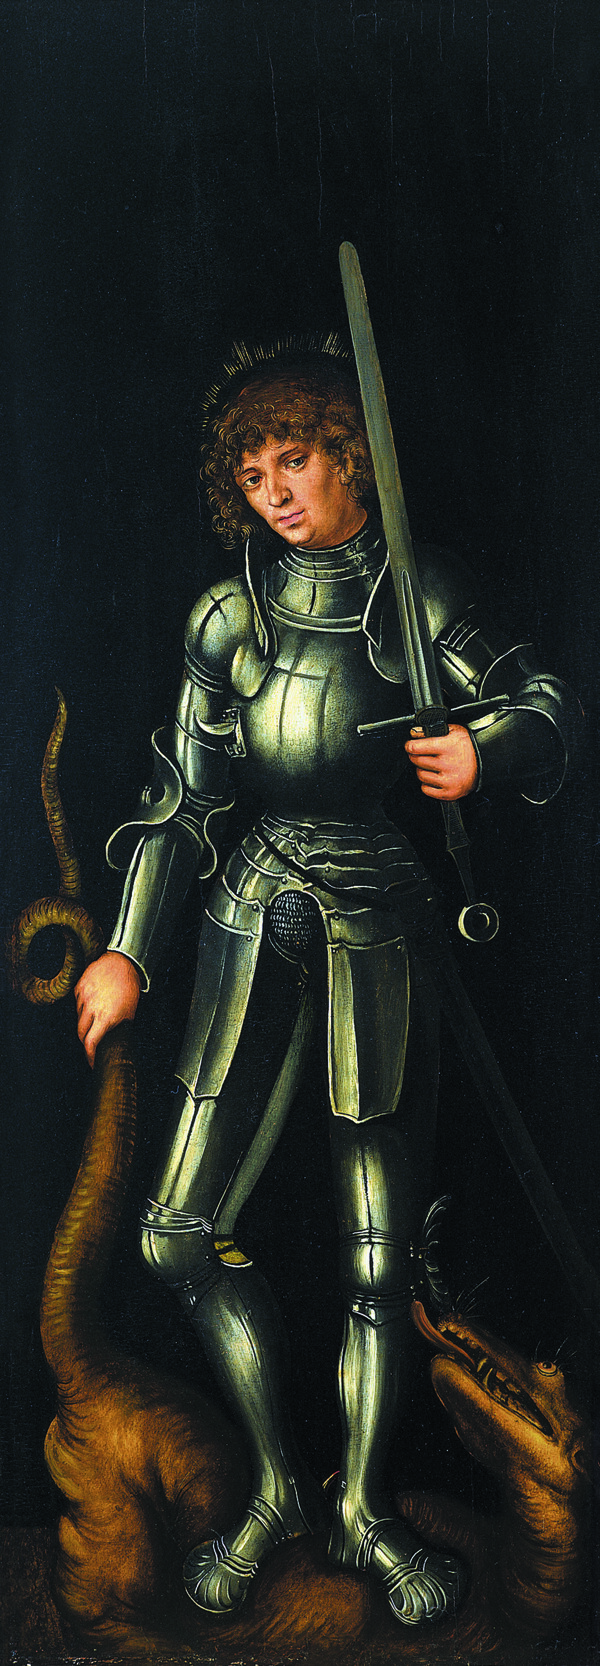 LucasCranachSaintGeorgeexteriorrightwing1514德国画家大卢卡斯克拉纳赫lucascranachtheelder文艺复兴人物人体油